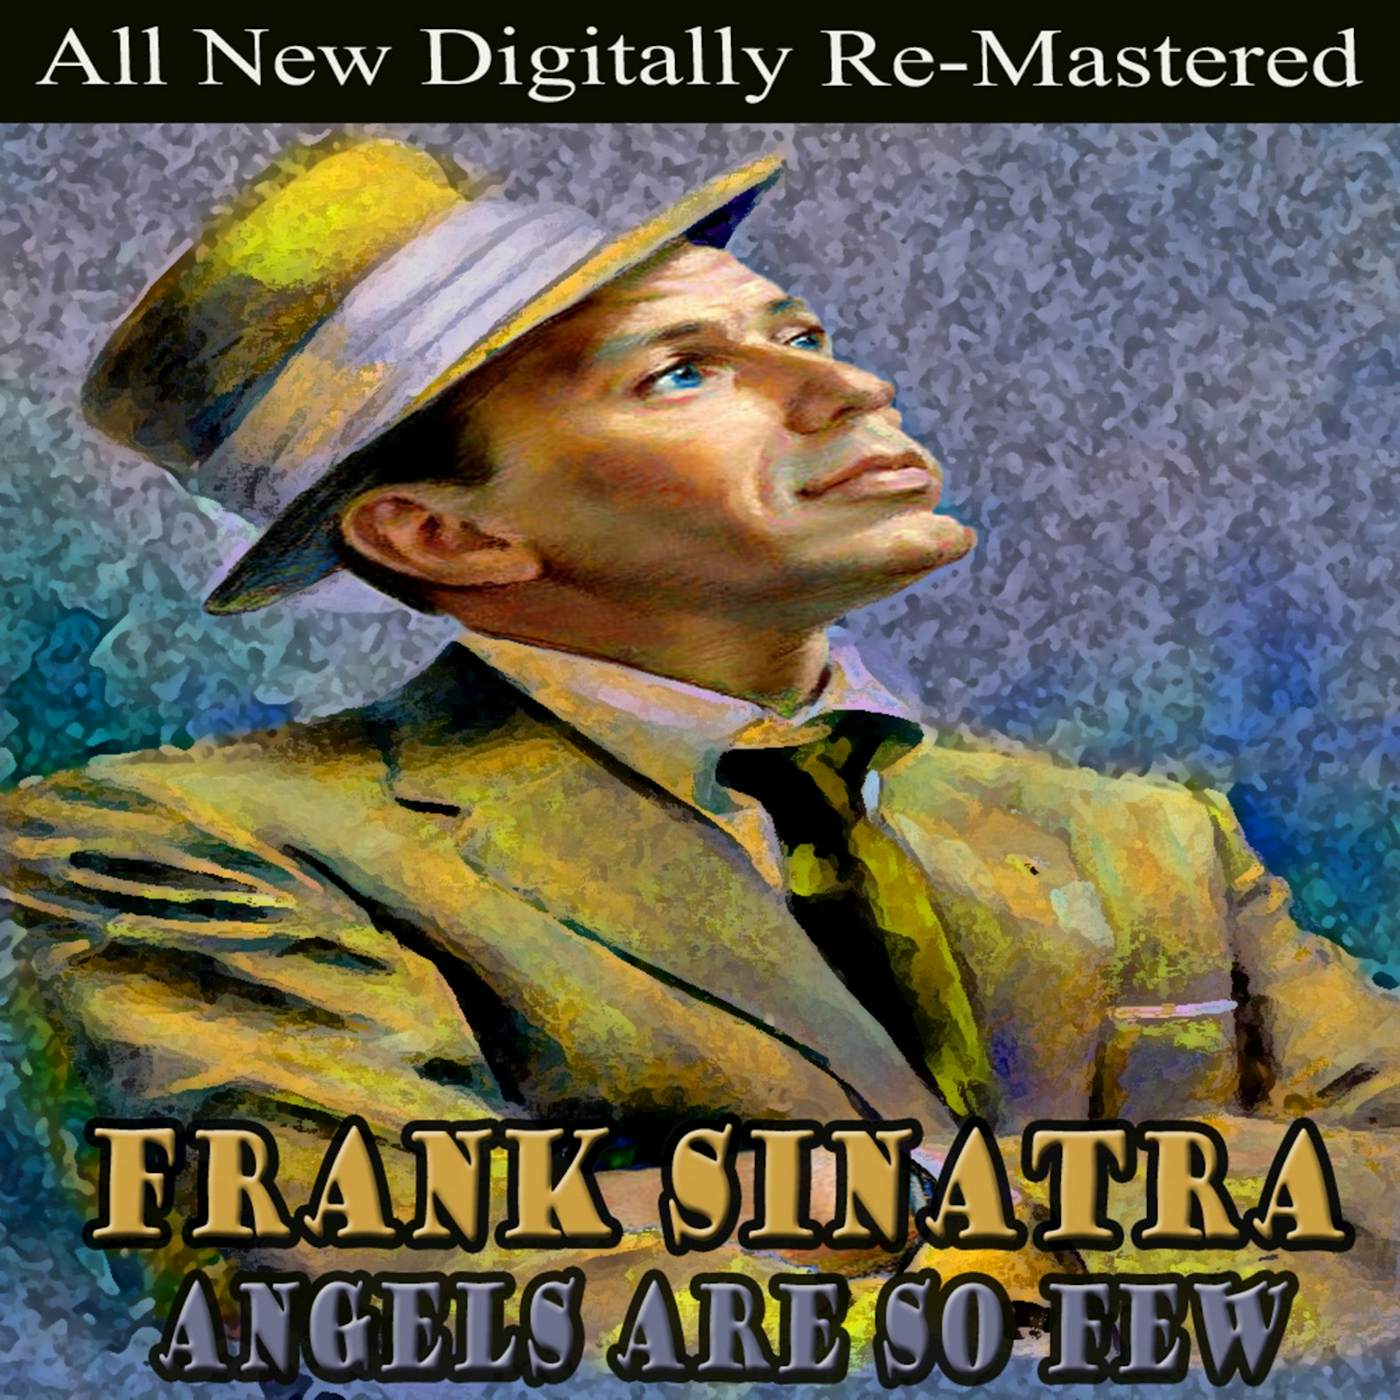 Frank Sinatra ANGELS ARE SO FEW CD